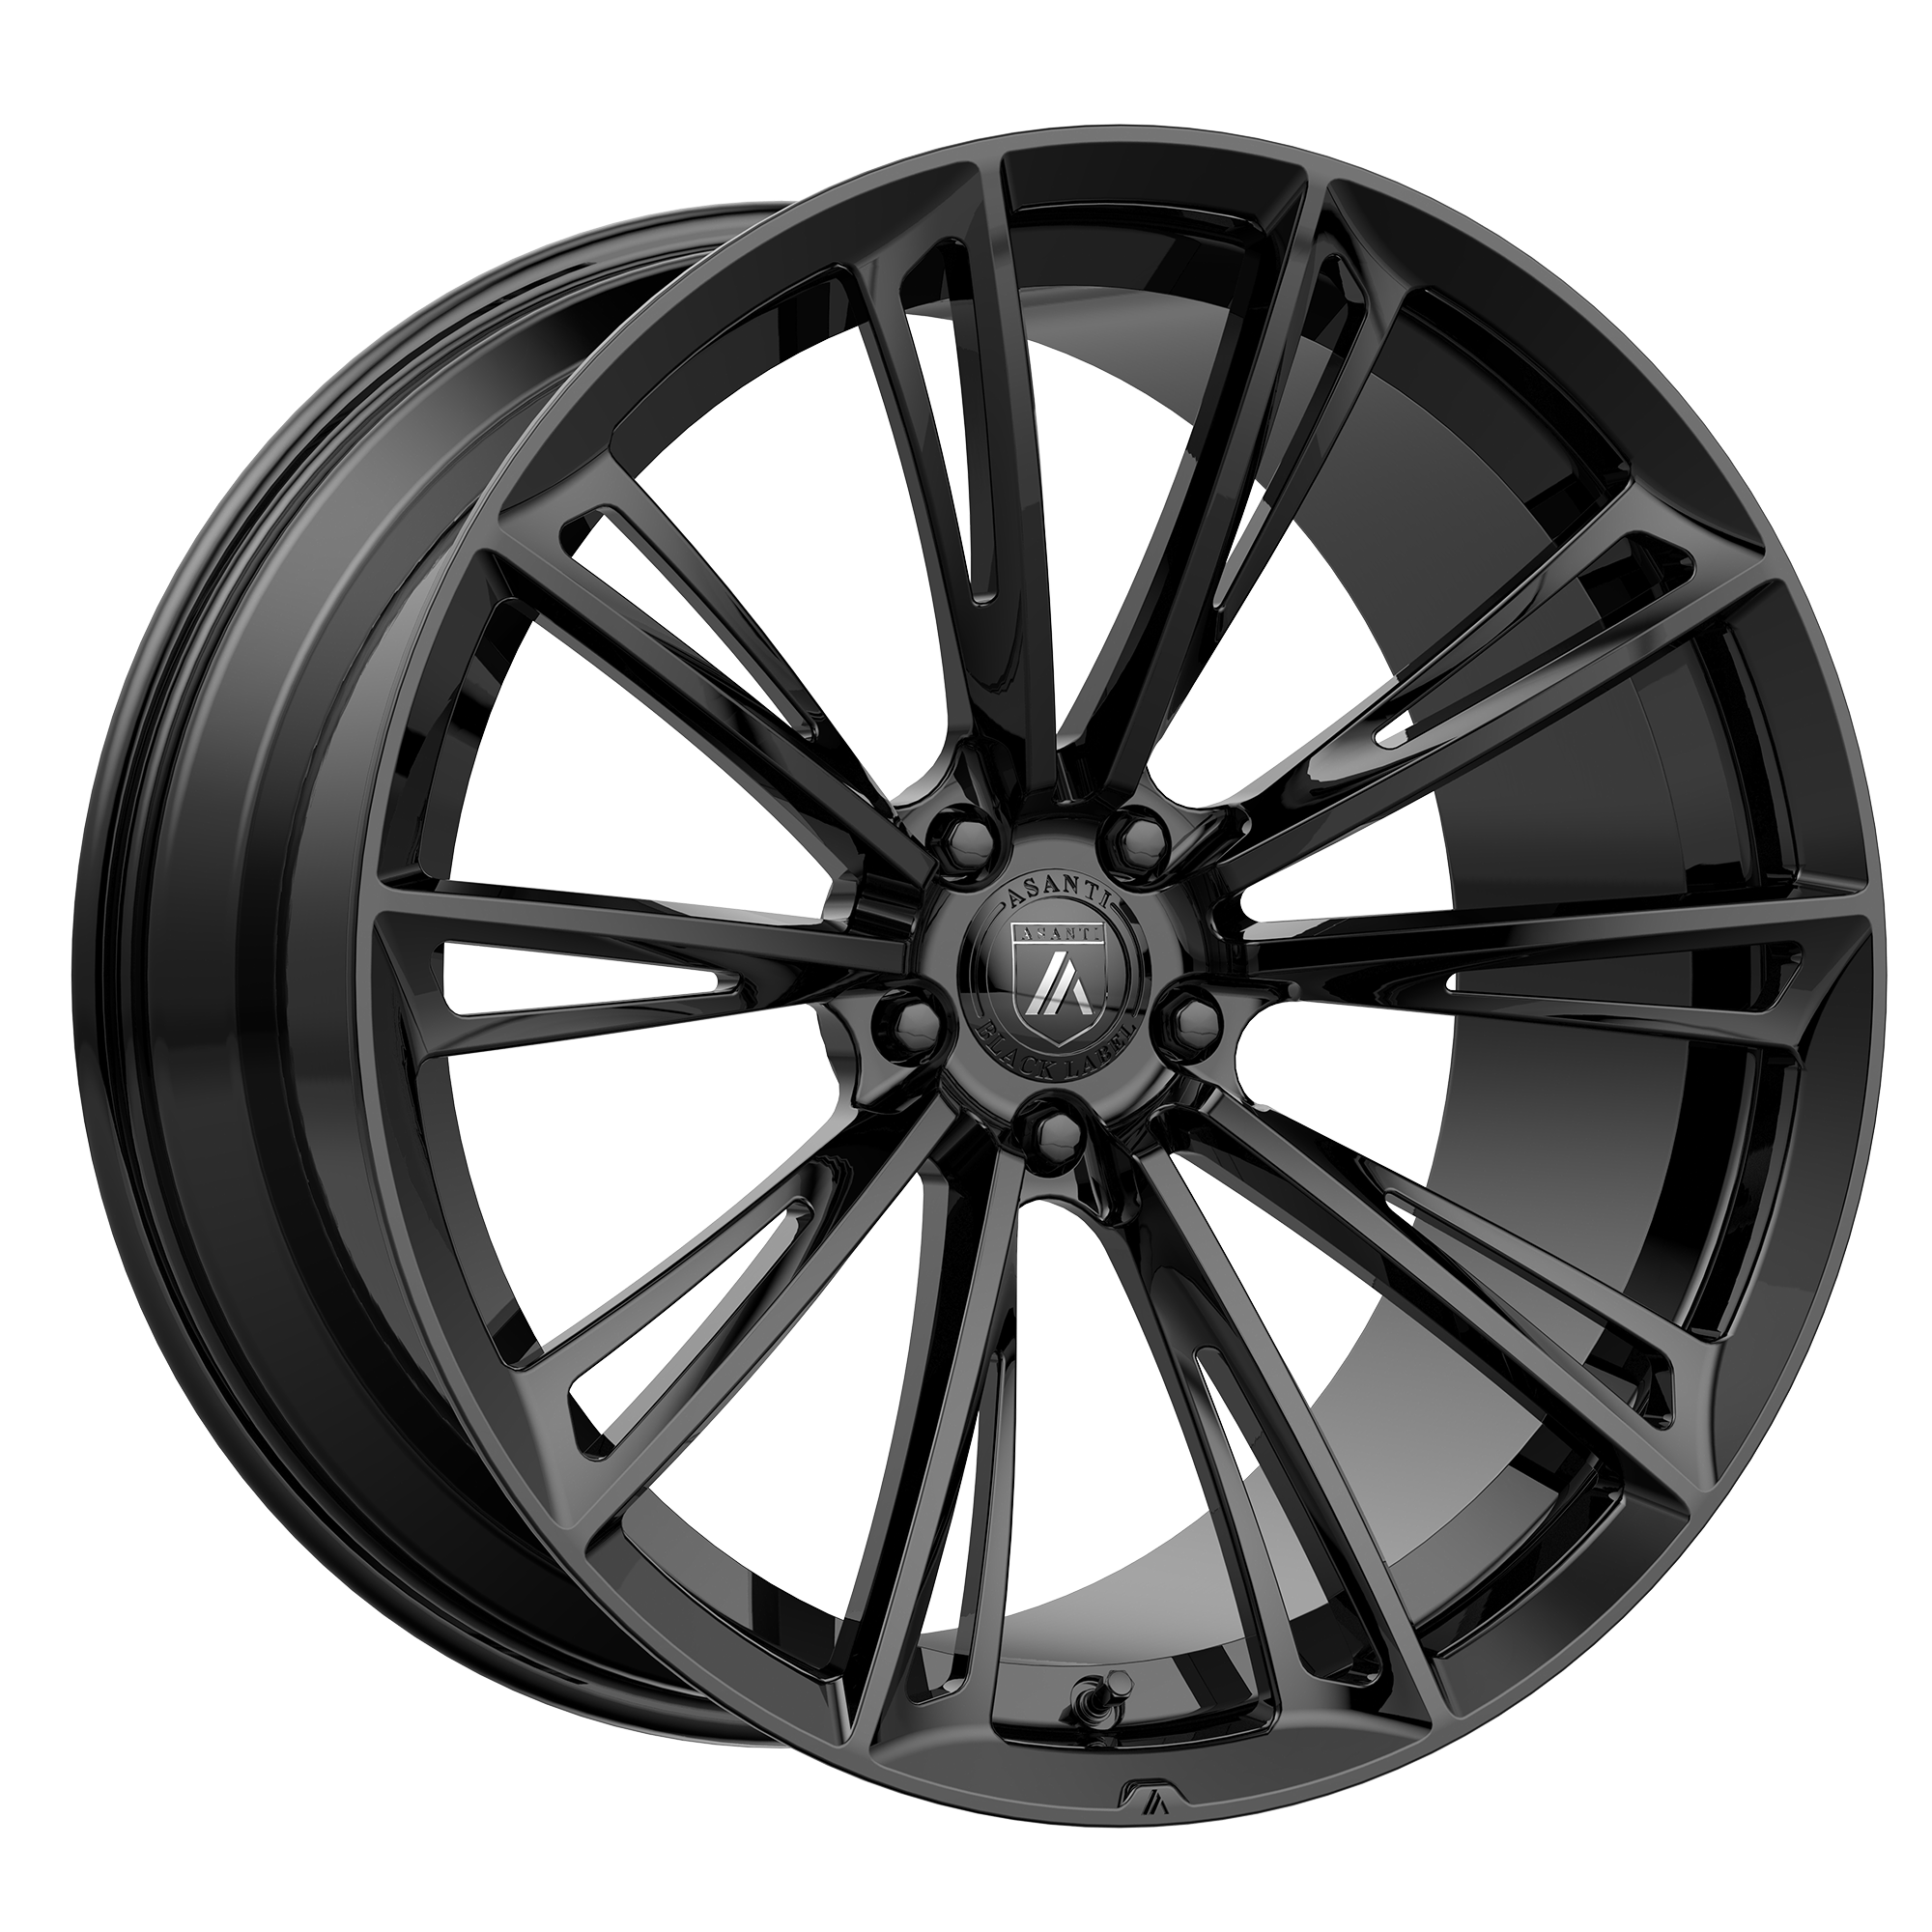 CORONA 22x10.5 5x115.00 GLOSS BLACK (25 mm) - Tires and Engine Performance